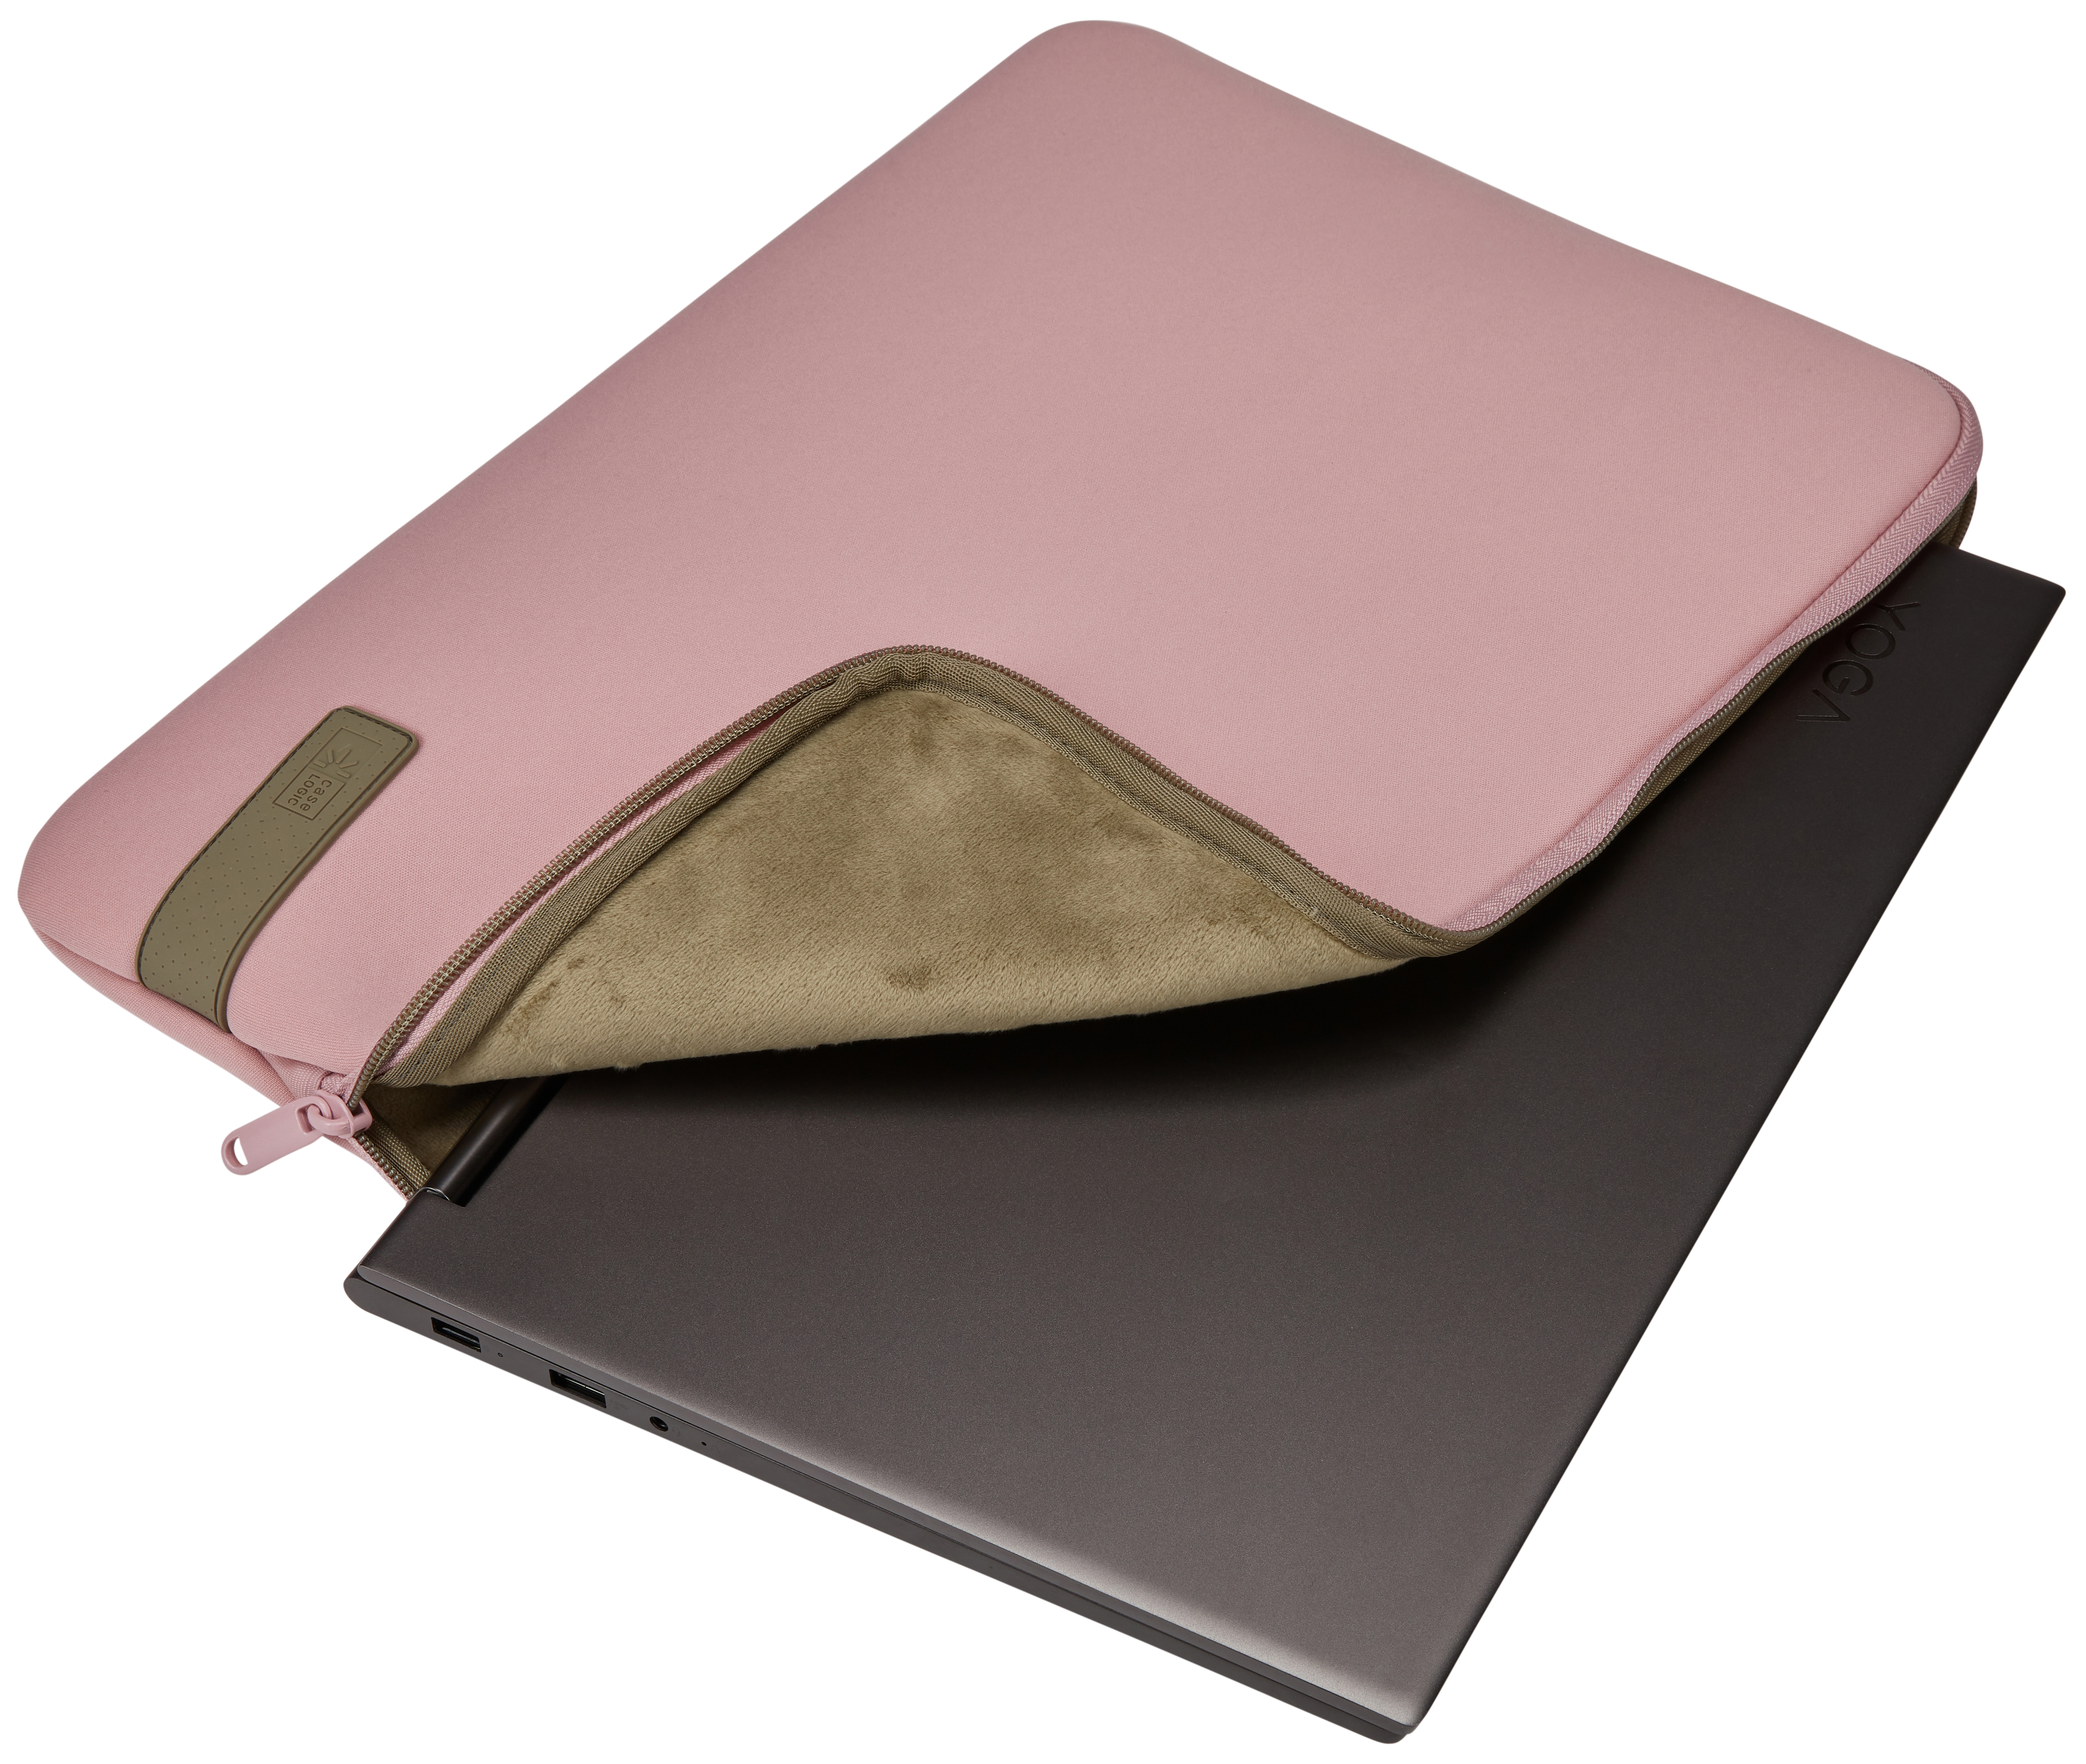 Reflect Zephyr Sleeve Sleeve CASE Notebook Pink/Mermaid für Polyester, LOGIC Universal